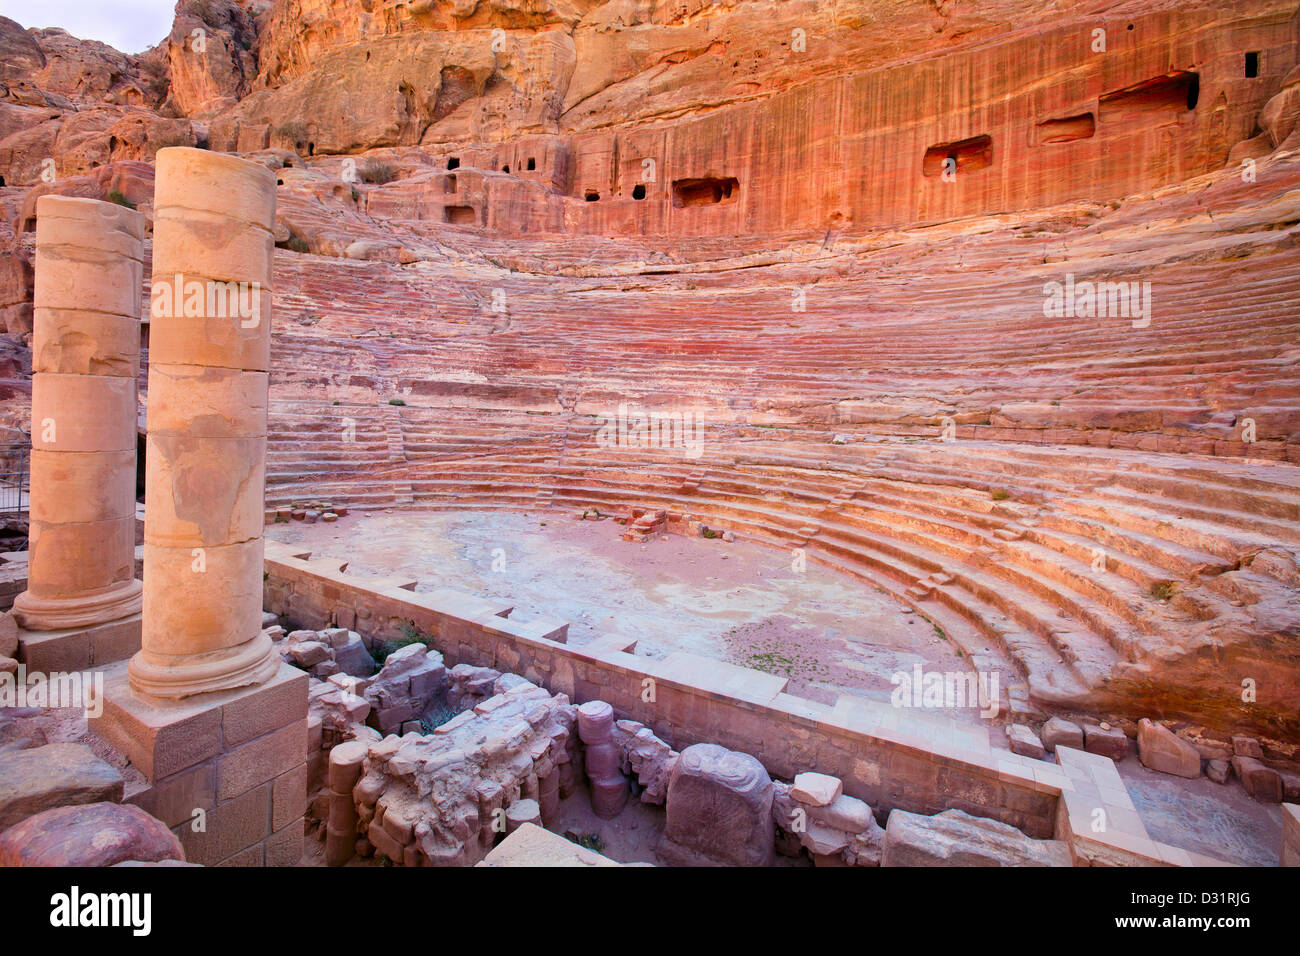 View of ancient amphitheater in Petra city, Jordan Stock Photo